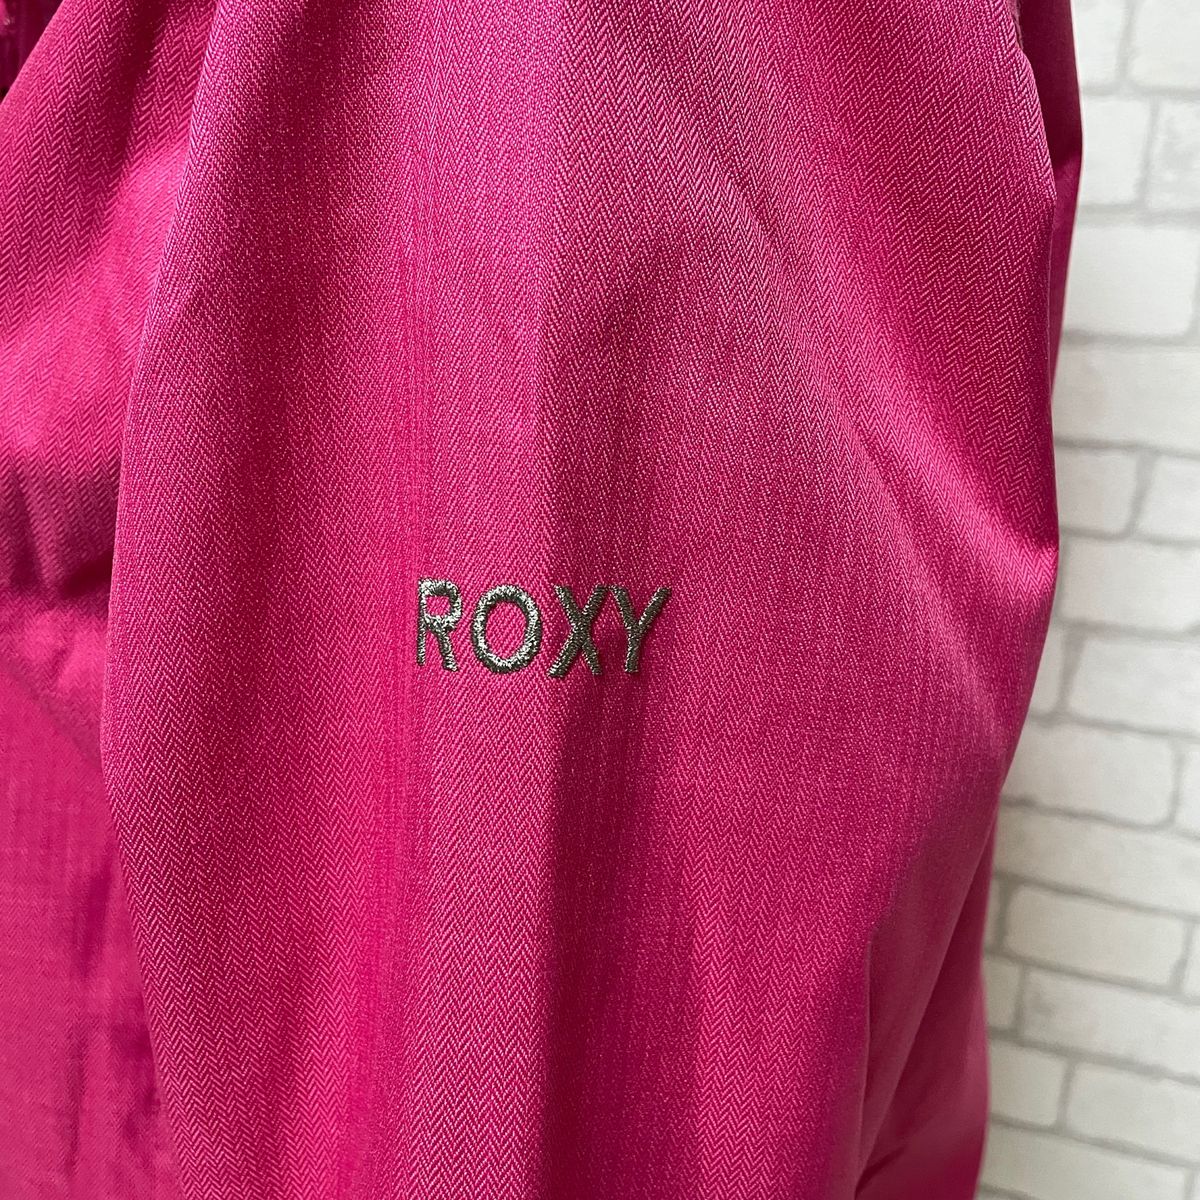 ROXY ロキシー スノボウェア スノーウェア レディース ジャケット 防水 撥水 ピンク ウィメンズ